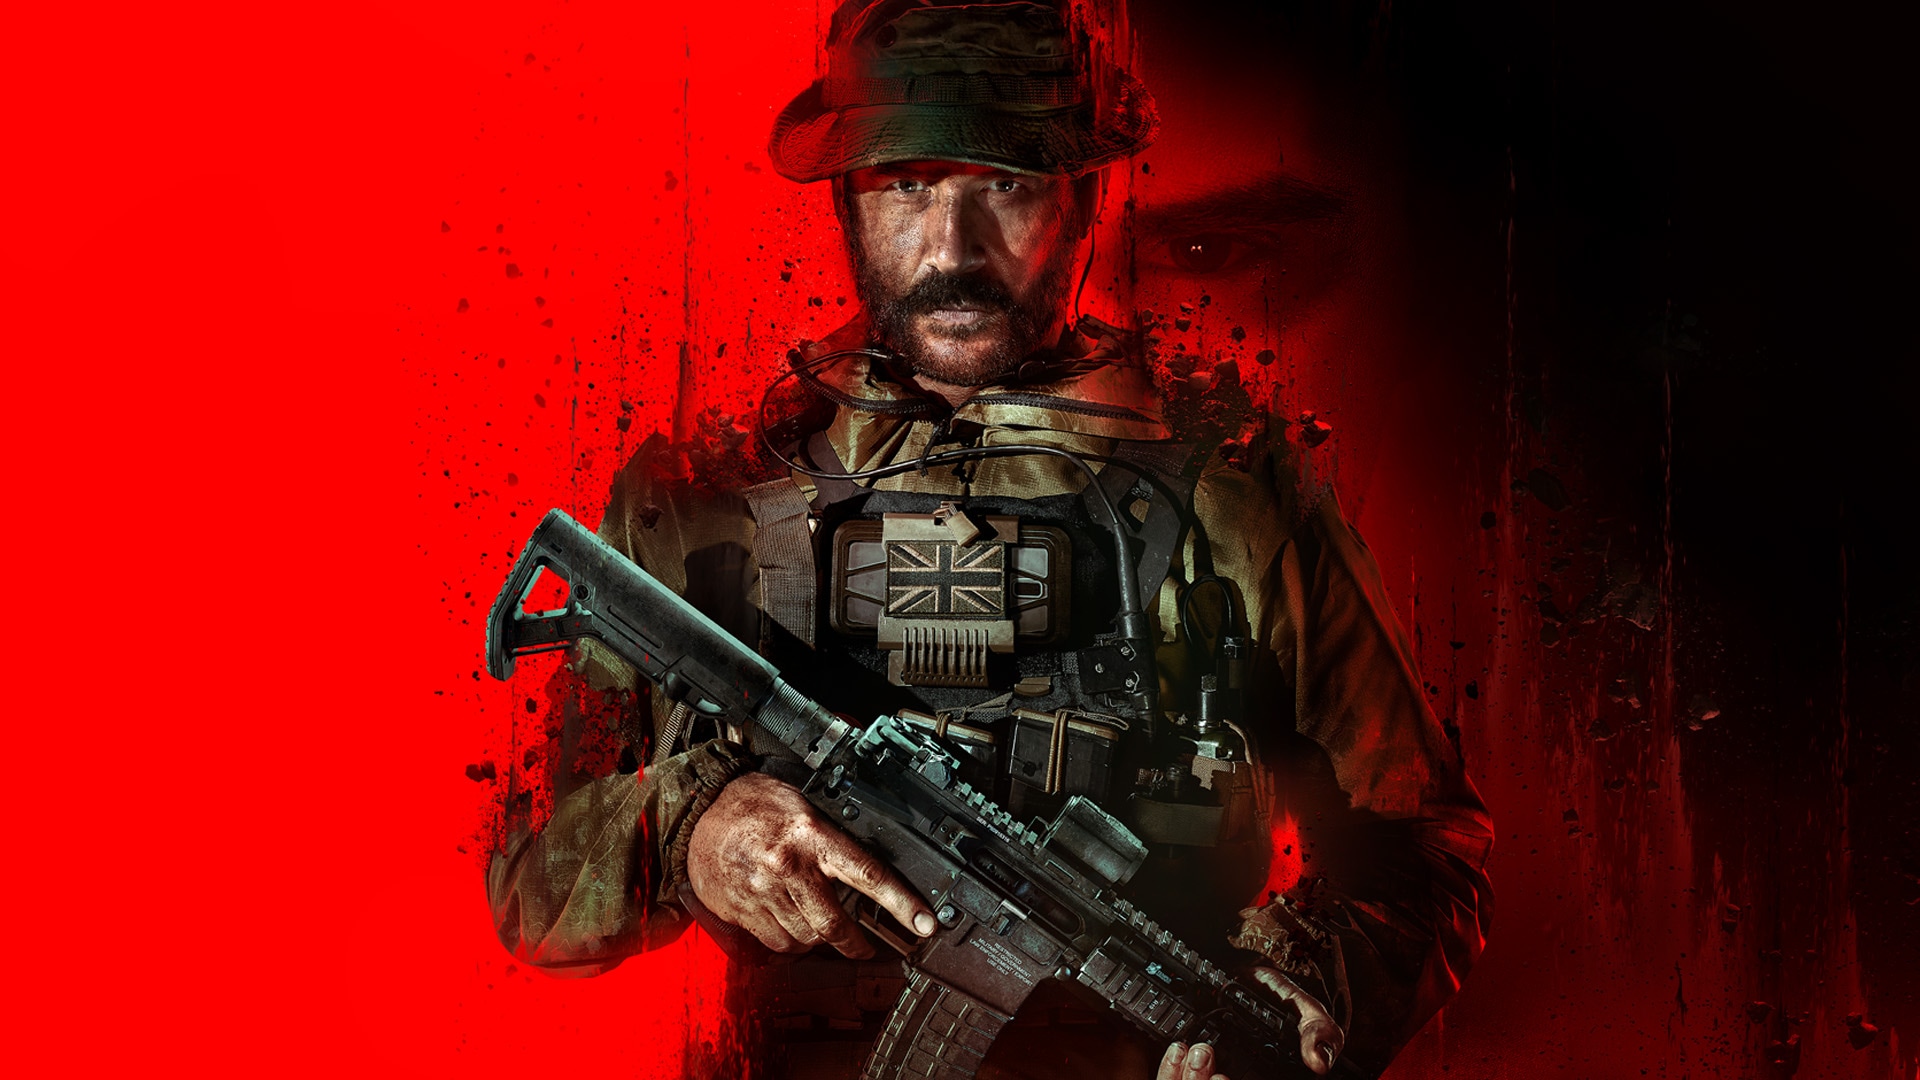 Buy Call of Duty®: Modern Warfare® 3